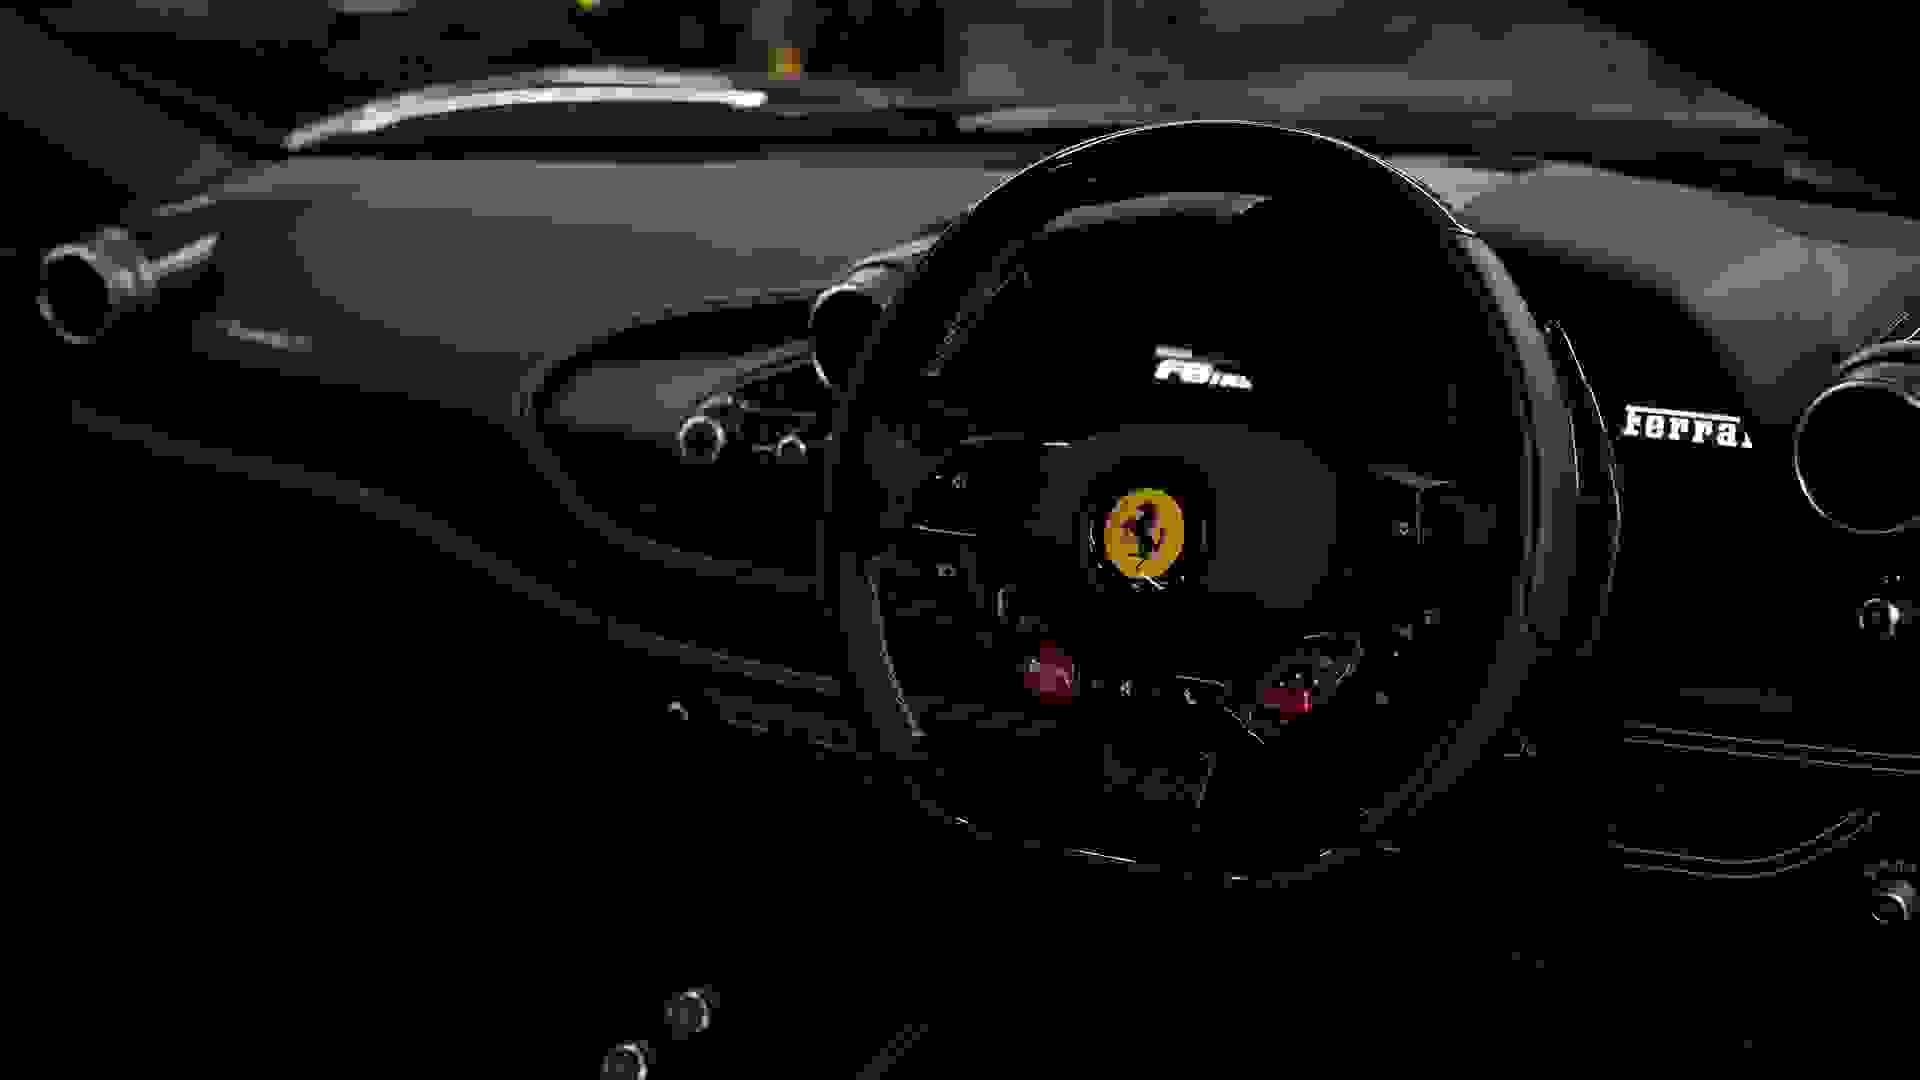 Ferrari F8 Photo 3bd938e3-fb69-4403-b0c5-1fdfae17dfae.jpg